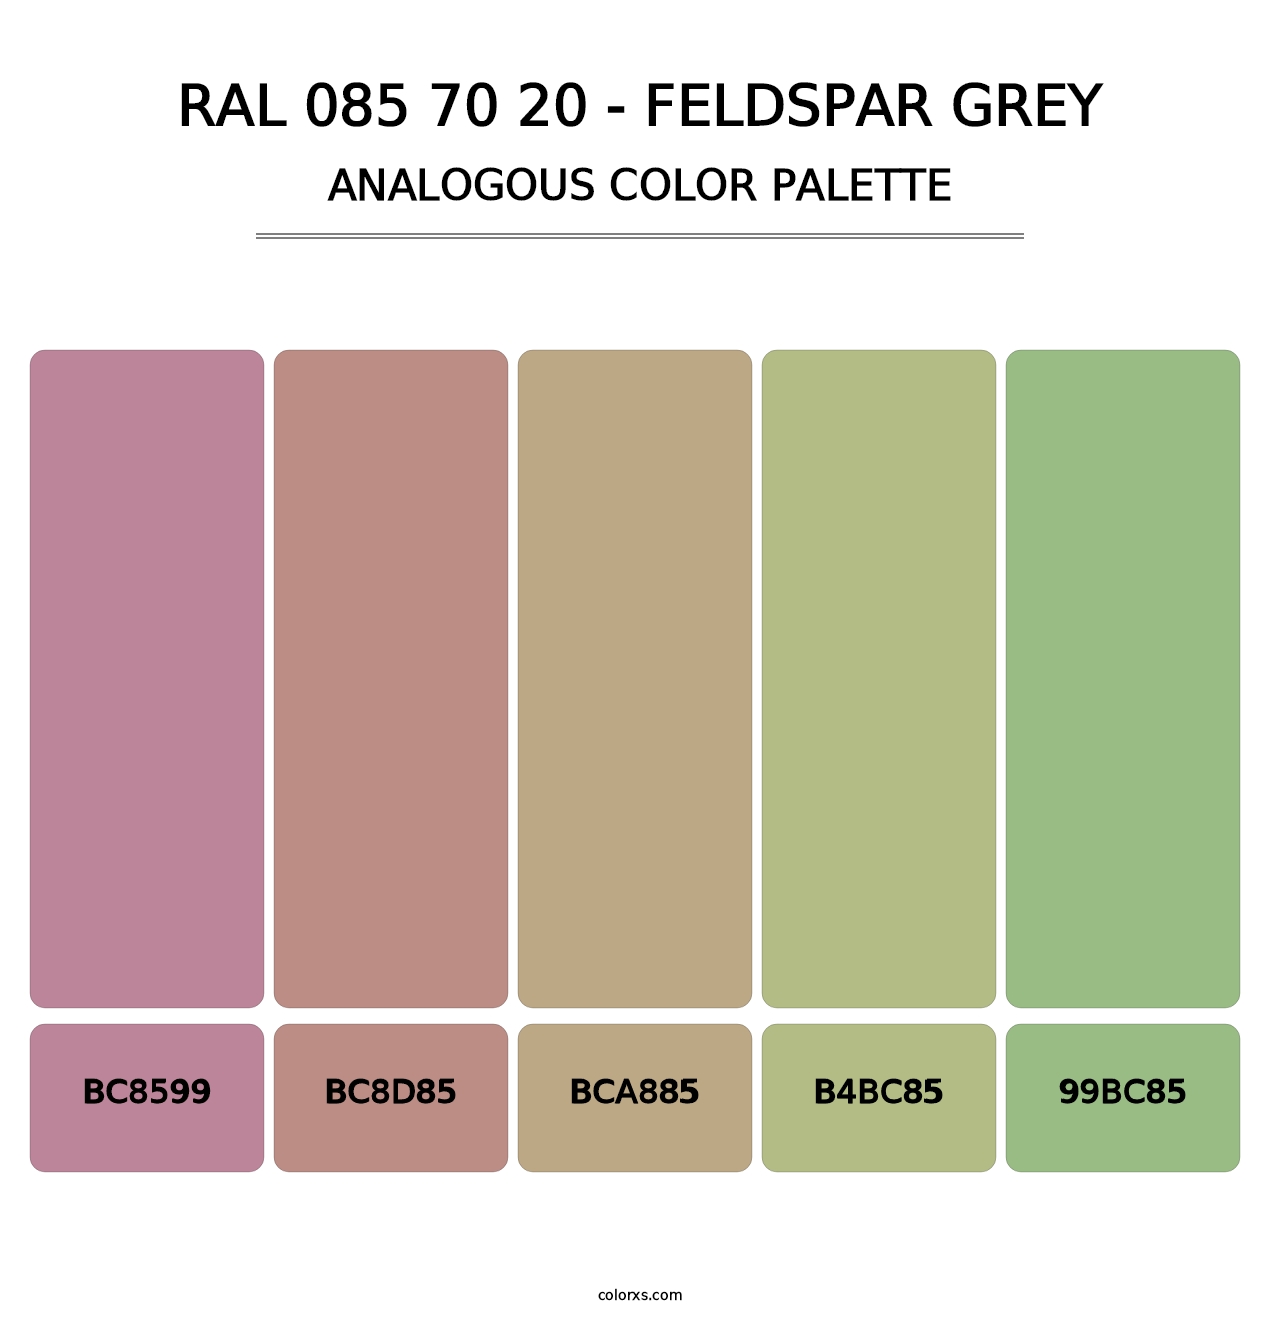 RAL 085 70 20 - Feldspar Grey - Analogous Color Palette